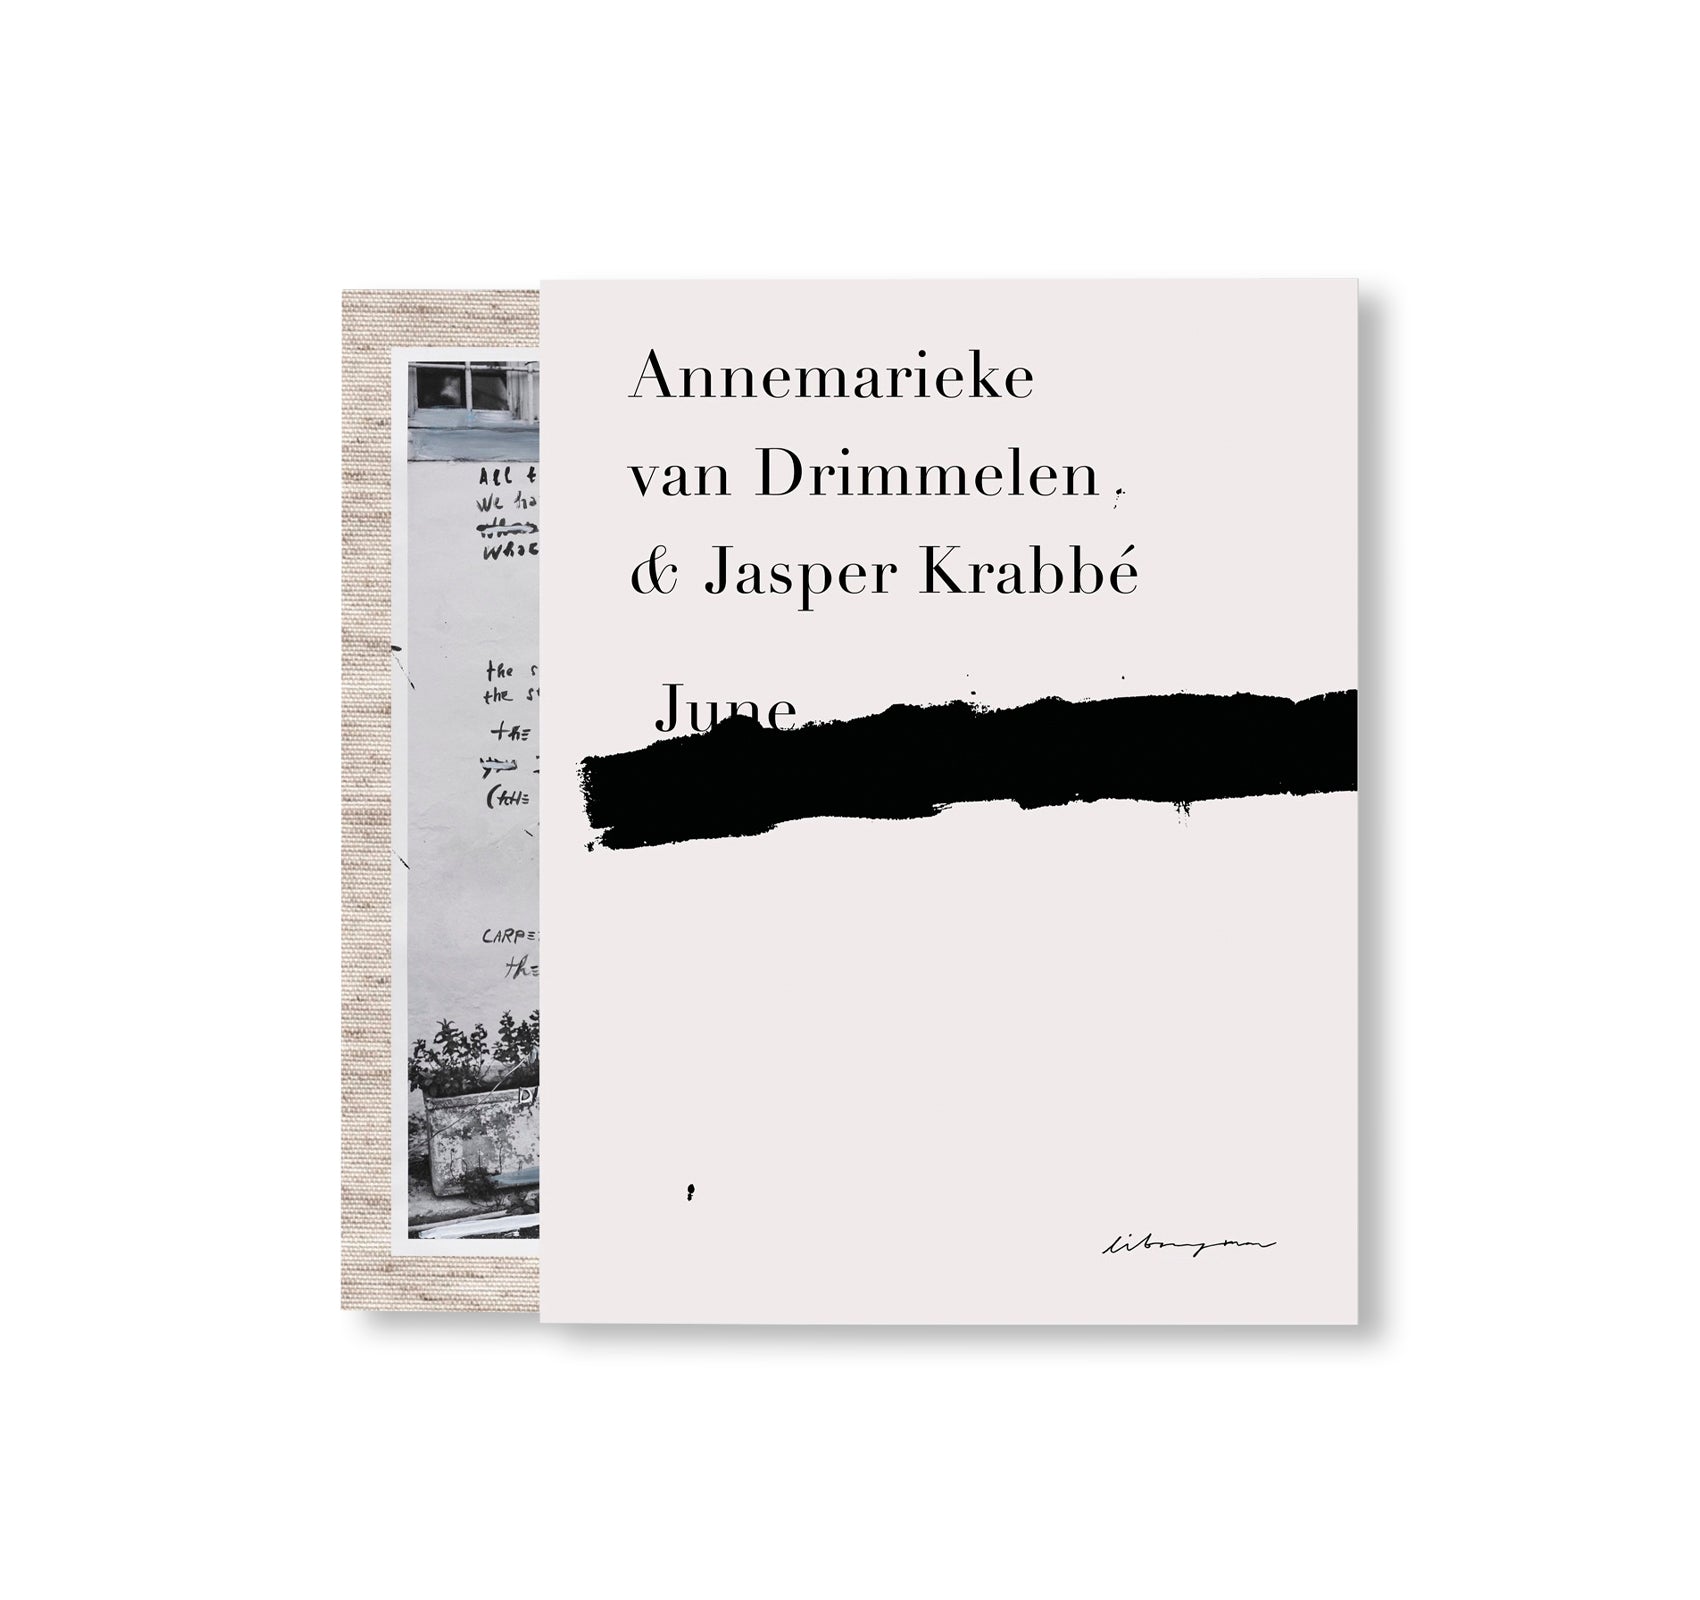 JUNE by Annemarieke van Drimmelen & Jasper Krabbé